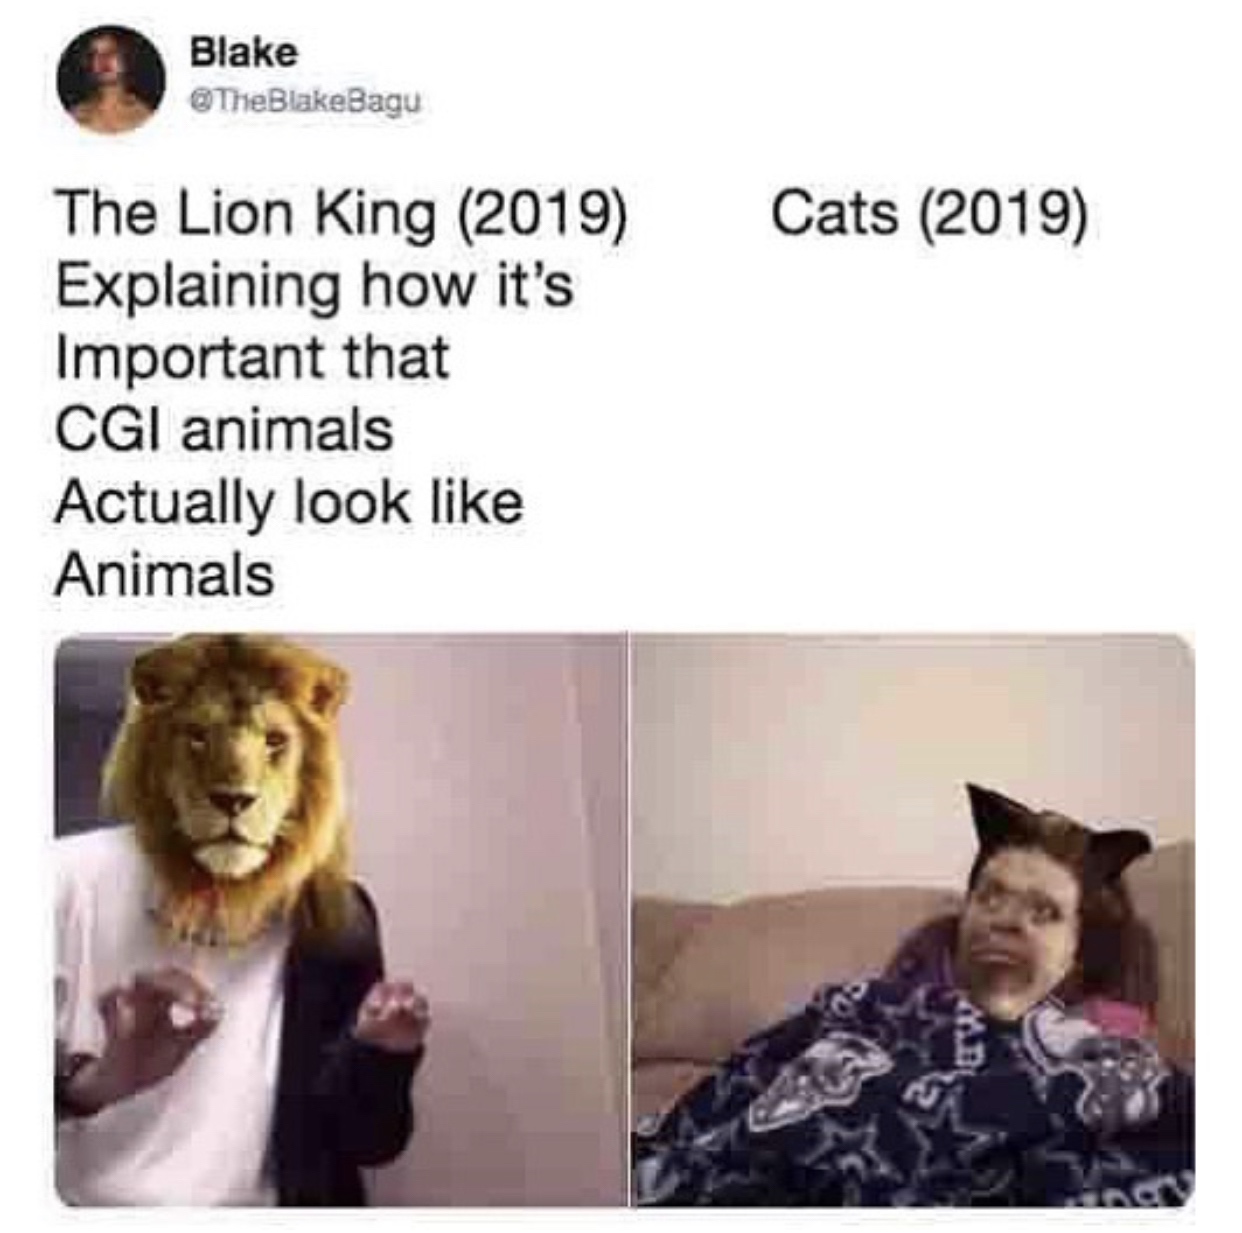 me explaining meme - Blake Cats 2019 The Lion King 2019 Explaining how it's Important that Cgi animals Actually look Animals